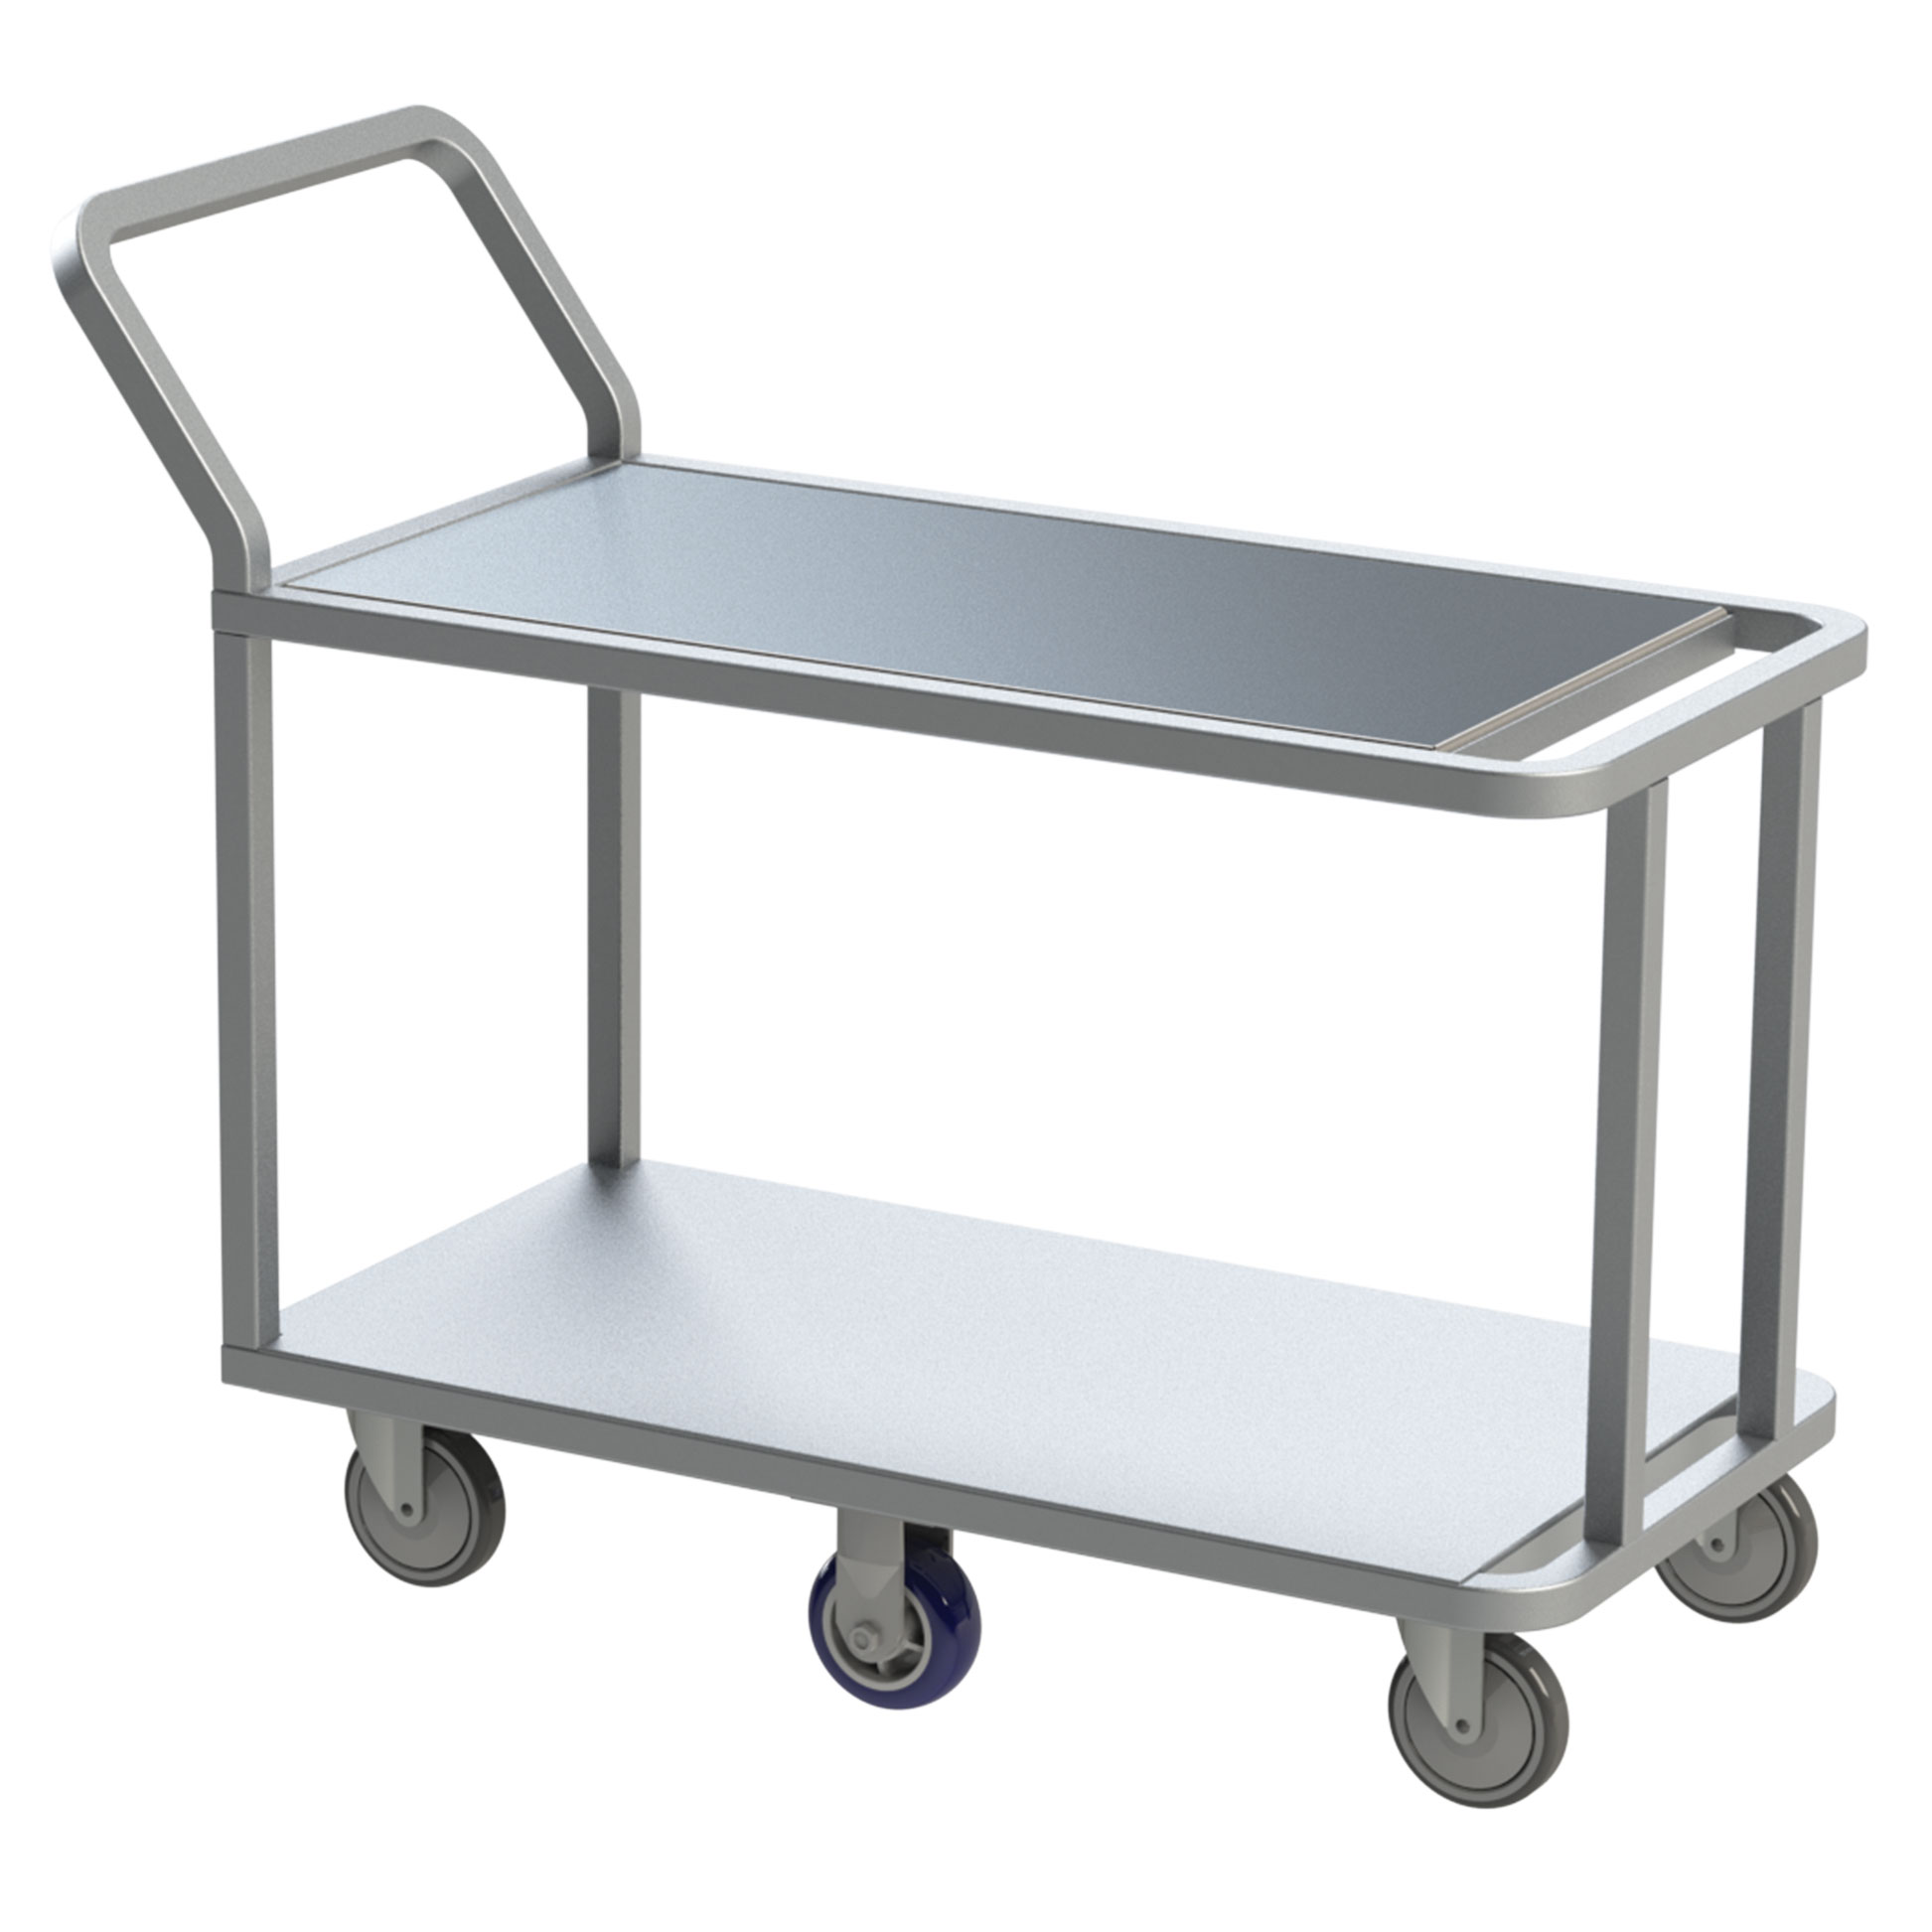 Under-Counter Cart – Exchange Cart Accessories, Inc.